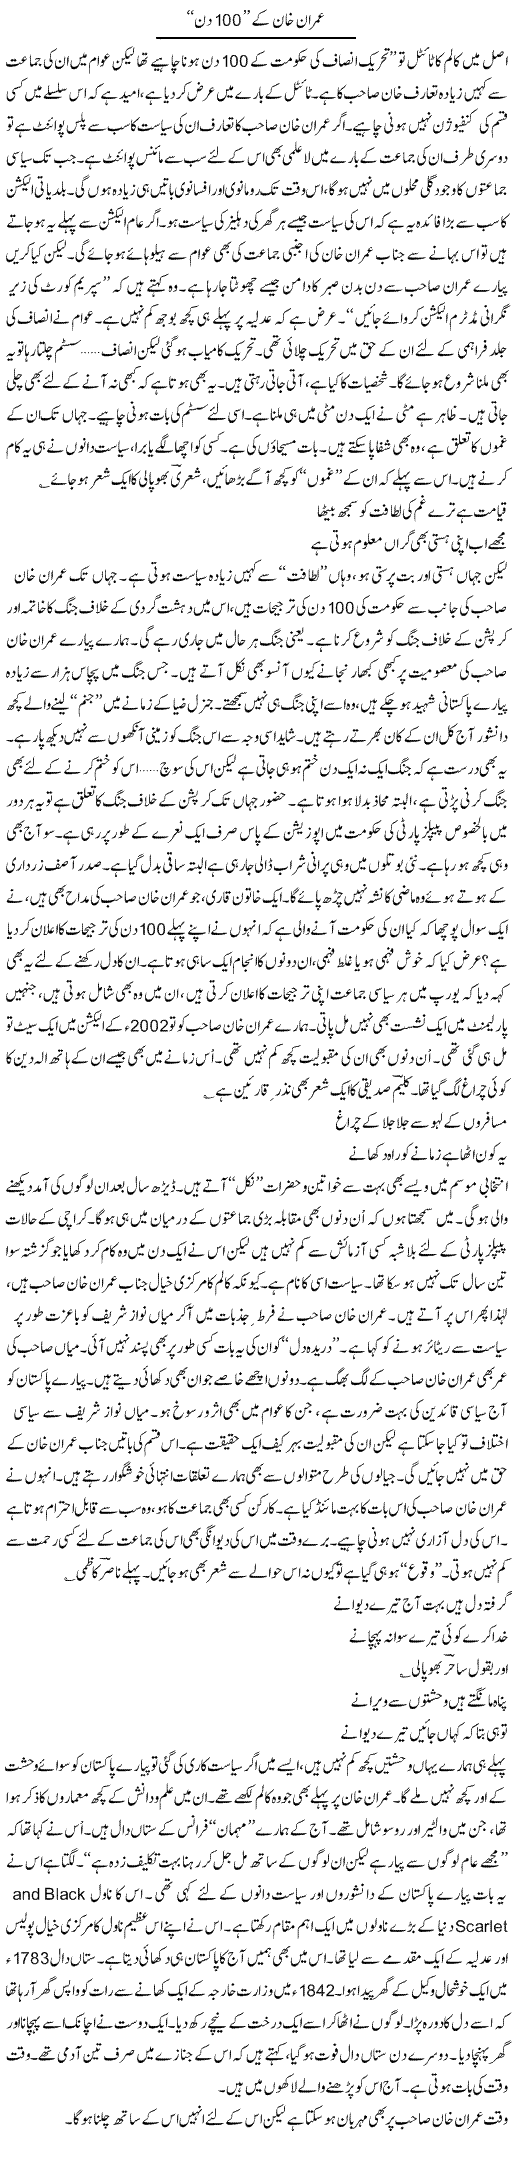 Imran Khan Express Column Ijaz Abdul Hafeez 21 July 2011